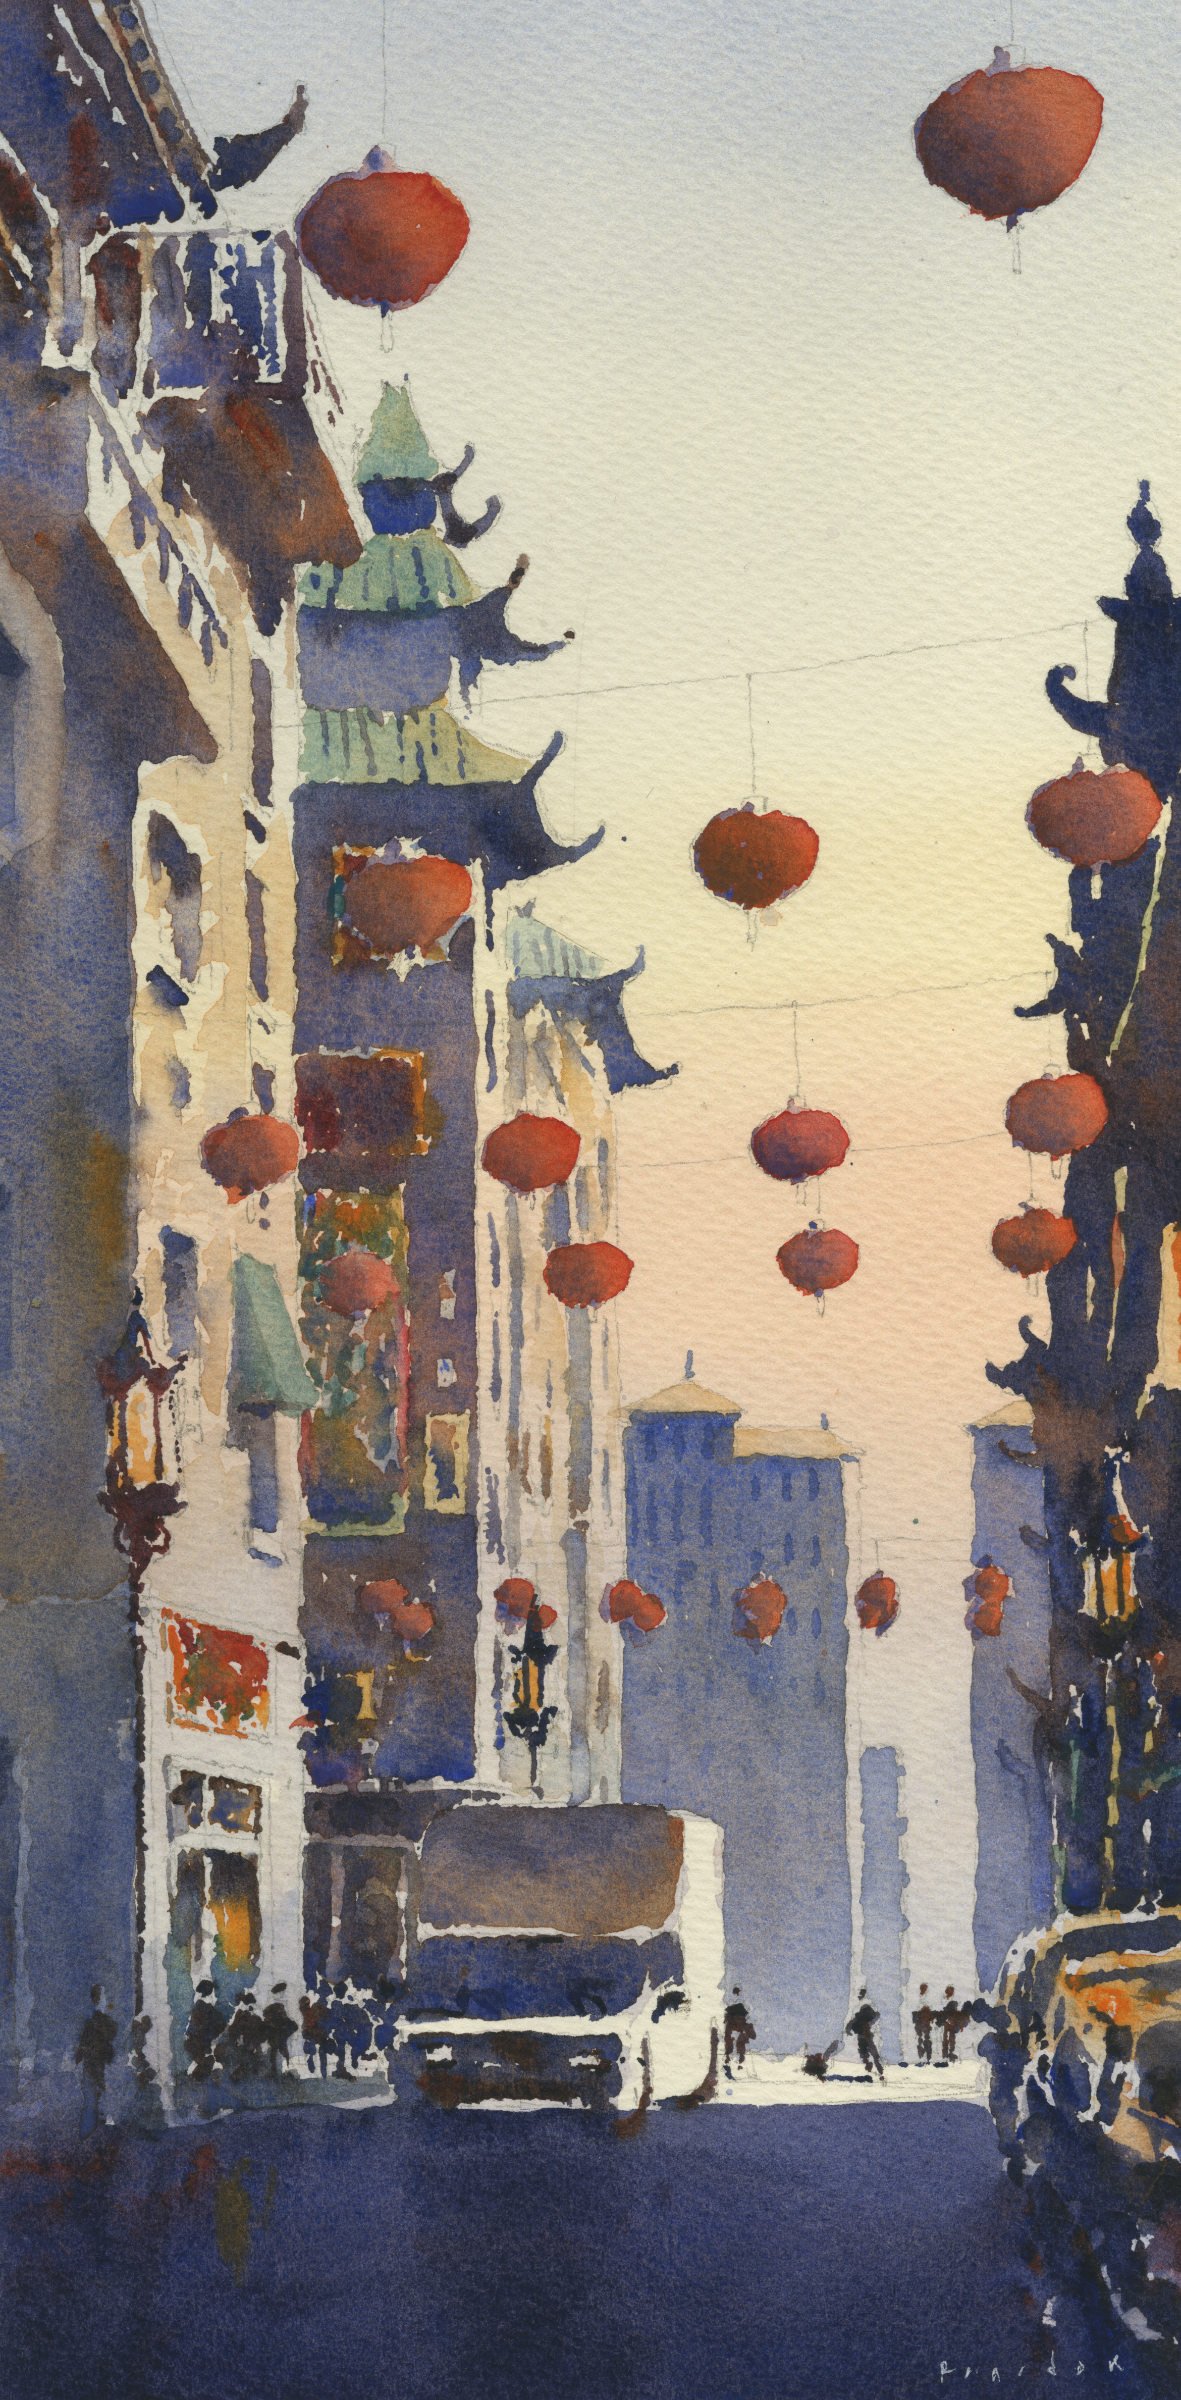 Chinatown by Michael Reardon